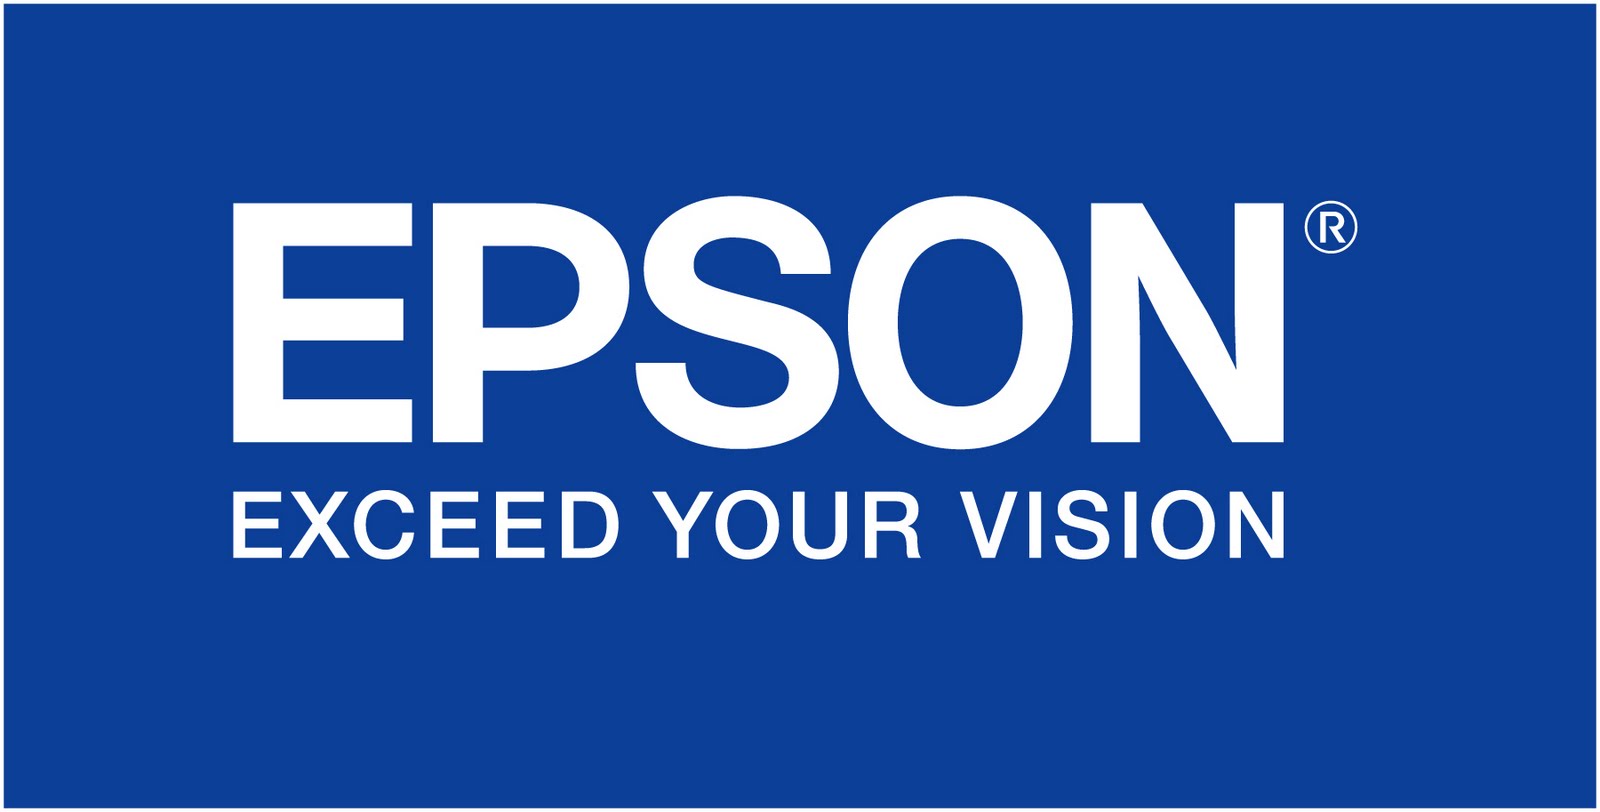 Epson brand